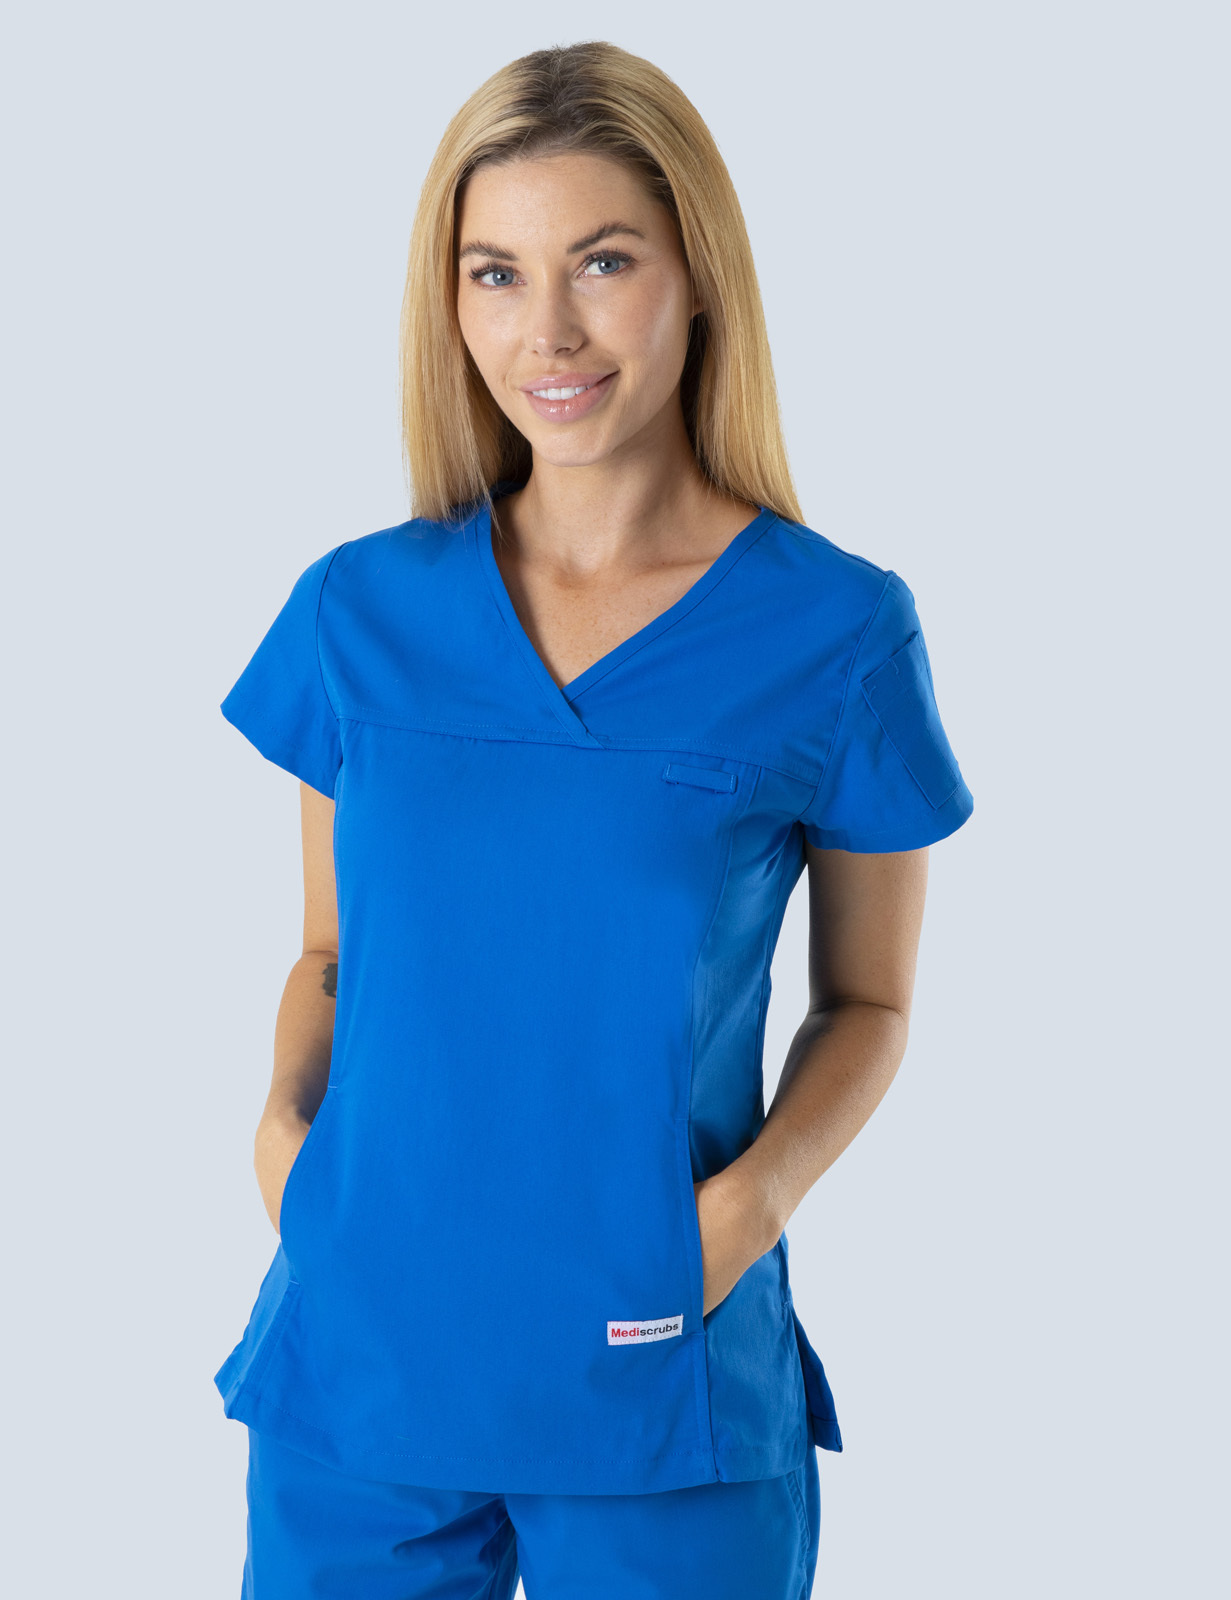 Queensland Children's Hospital Emergency Department Clinical Nurse  Uniform Top Bundle  (Women's Fit Top in Royal  incl Logos)